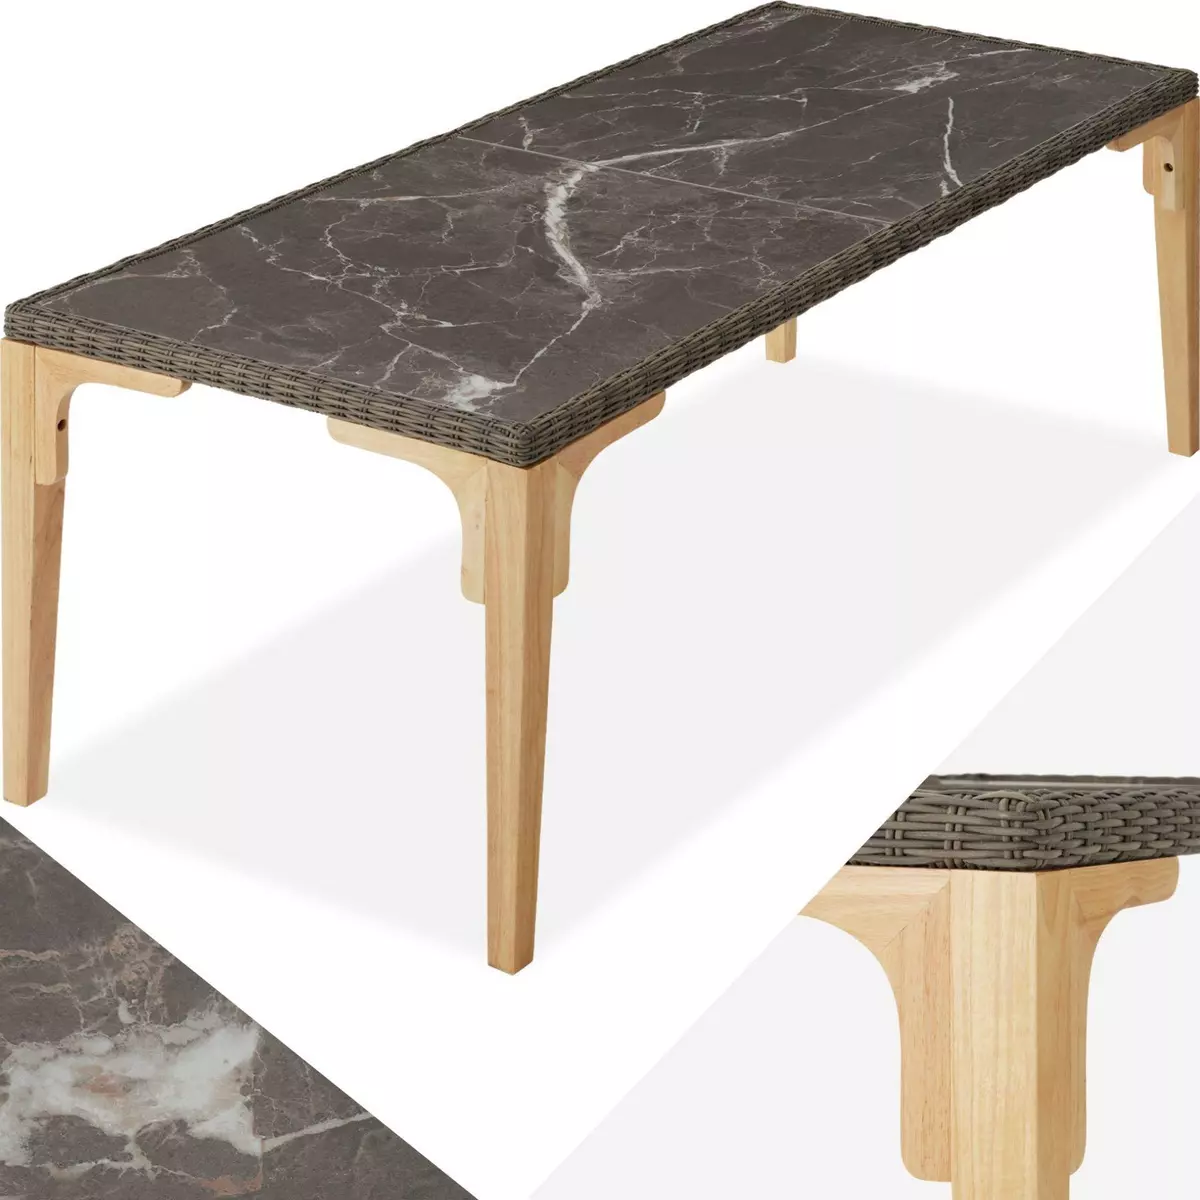 tectake Table en rotin avec cadre en Aluminium et Bois